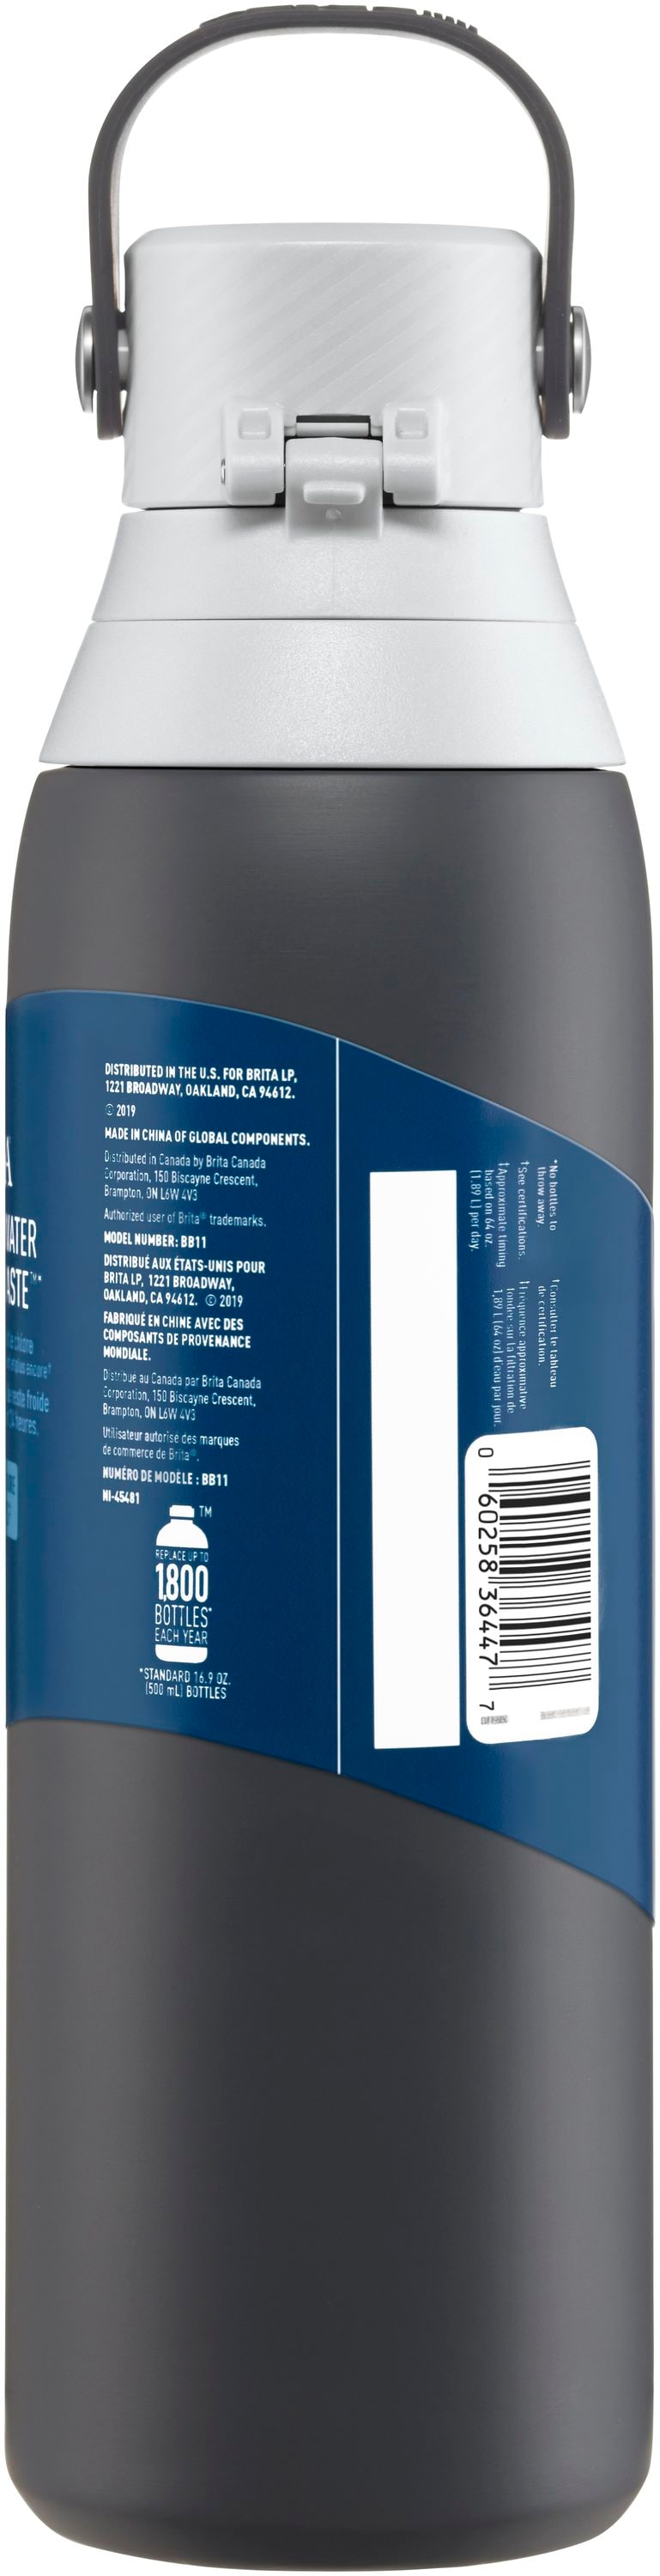 Brita Stainless Steel Water Filter Bottle 32 Oz & 20 Oz Review 💦 